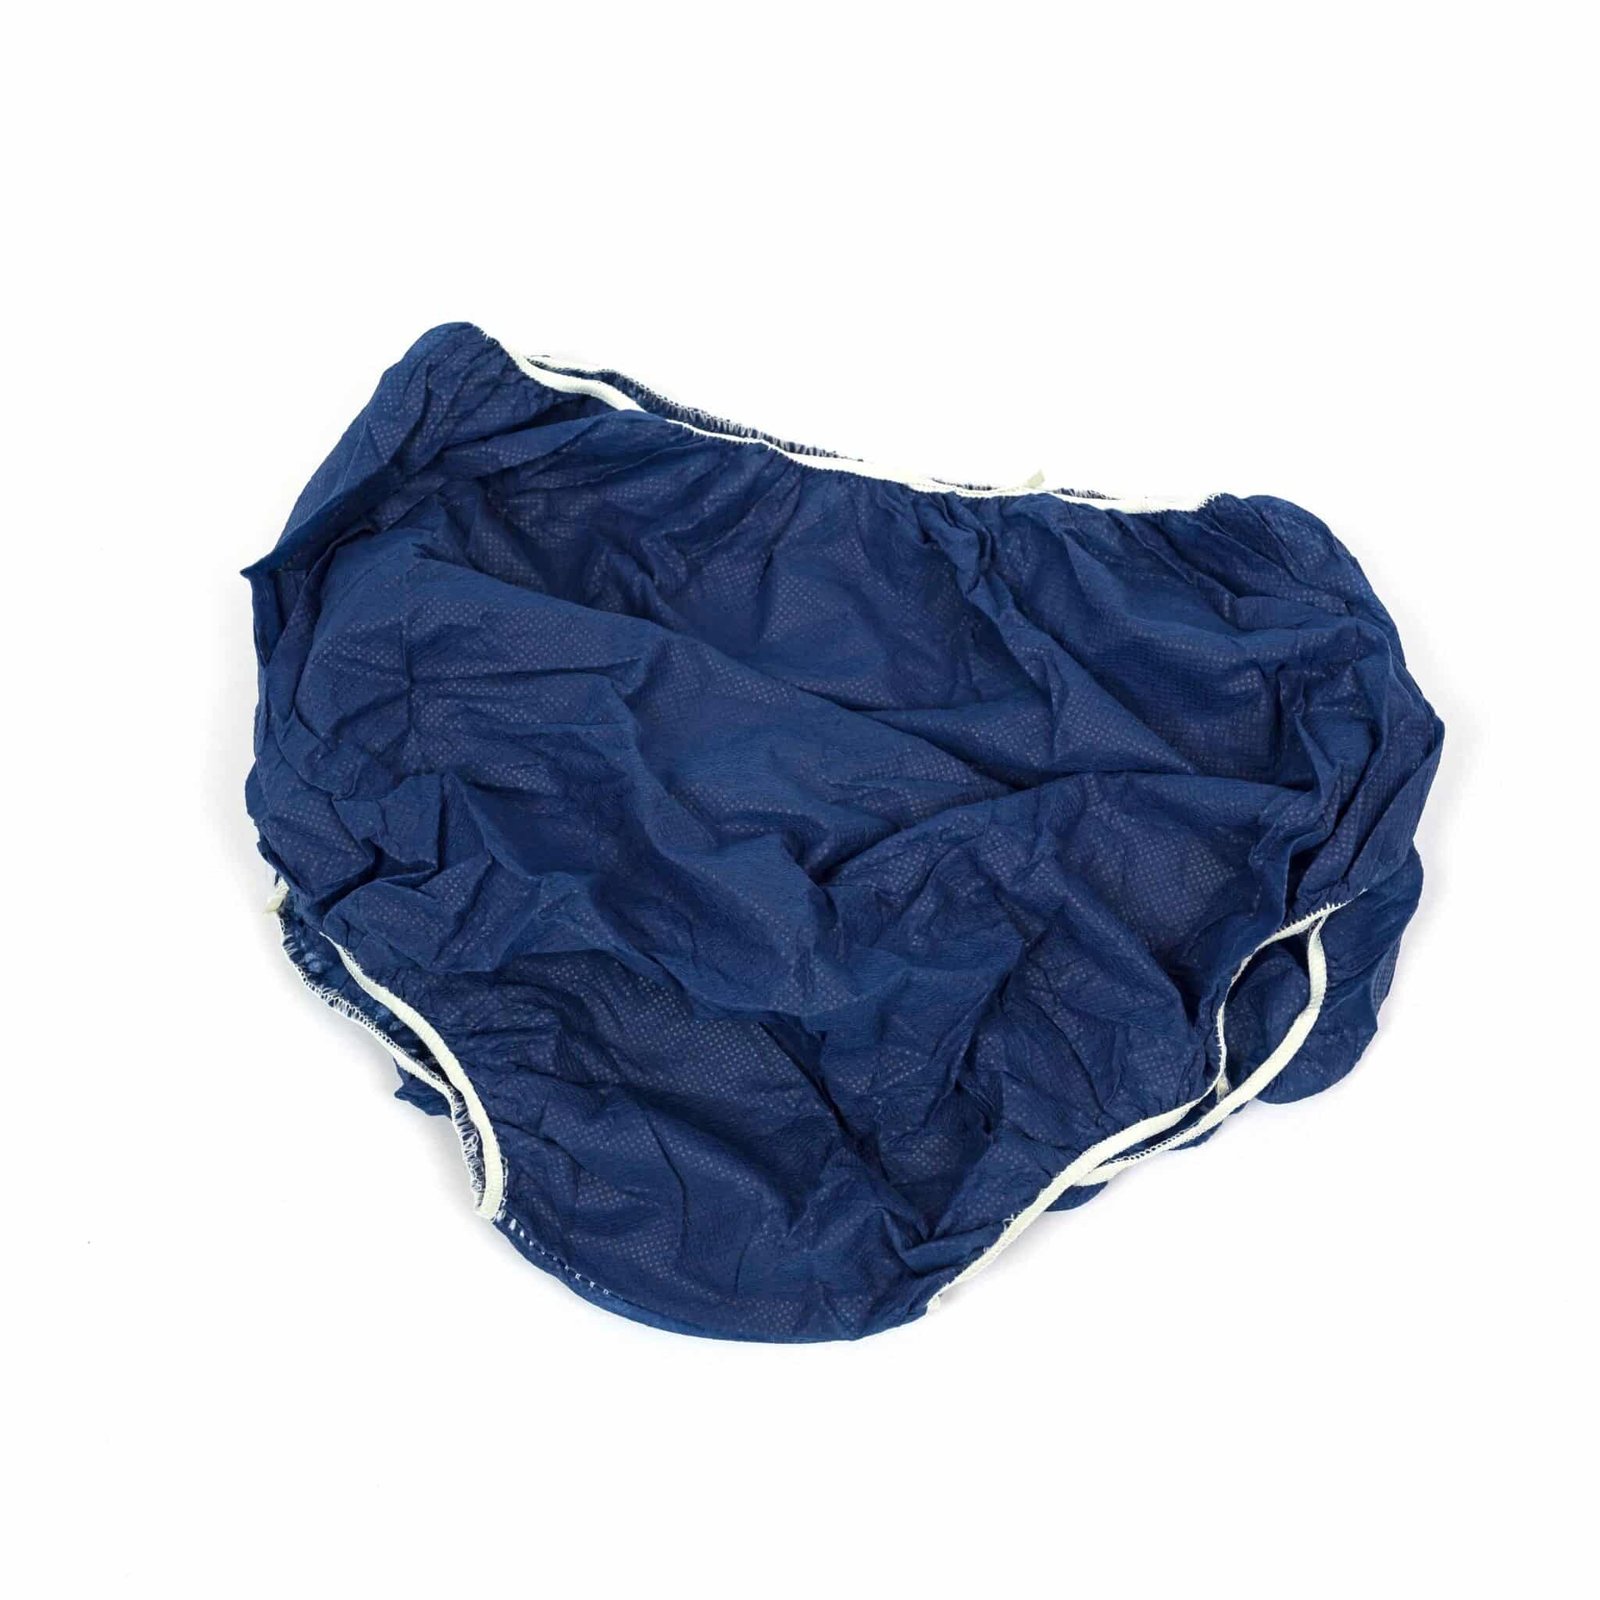 Panties Disposable Underwear for WomenFor Women